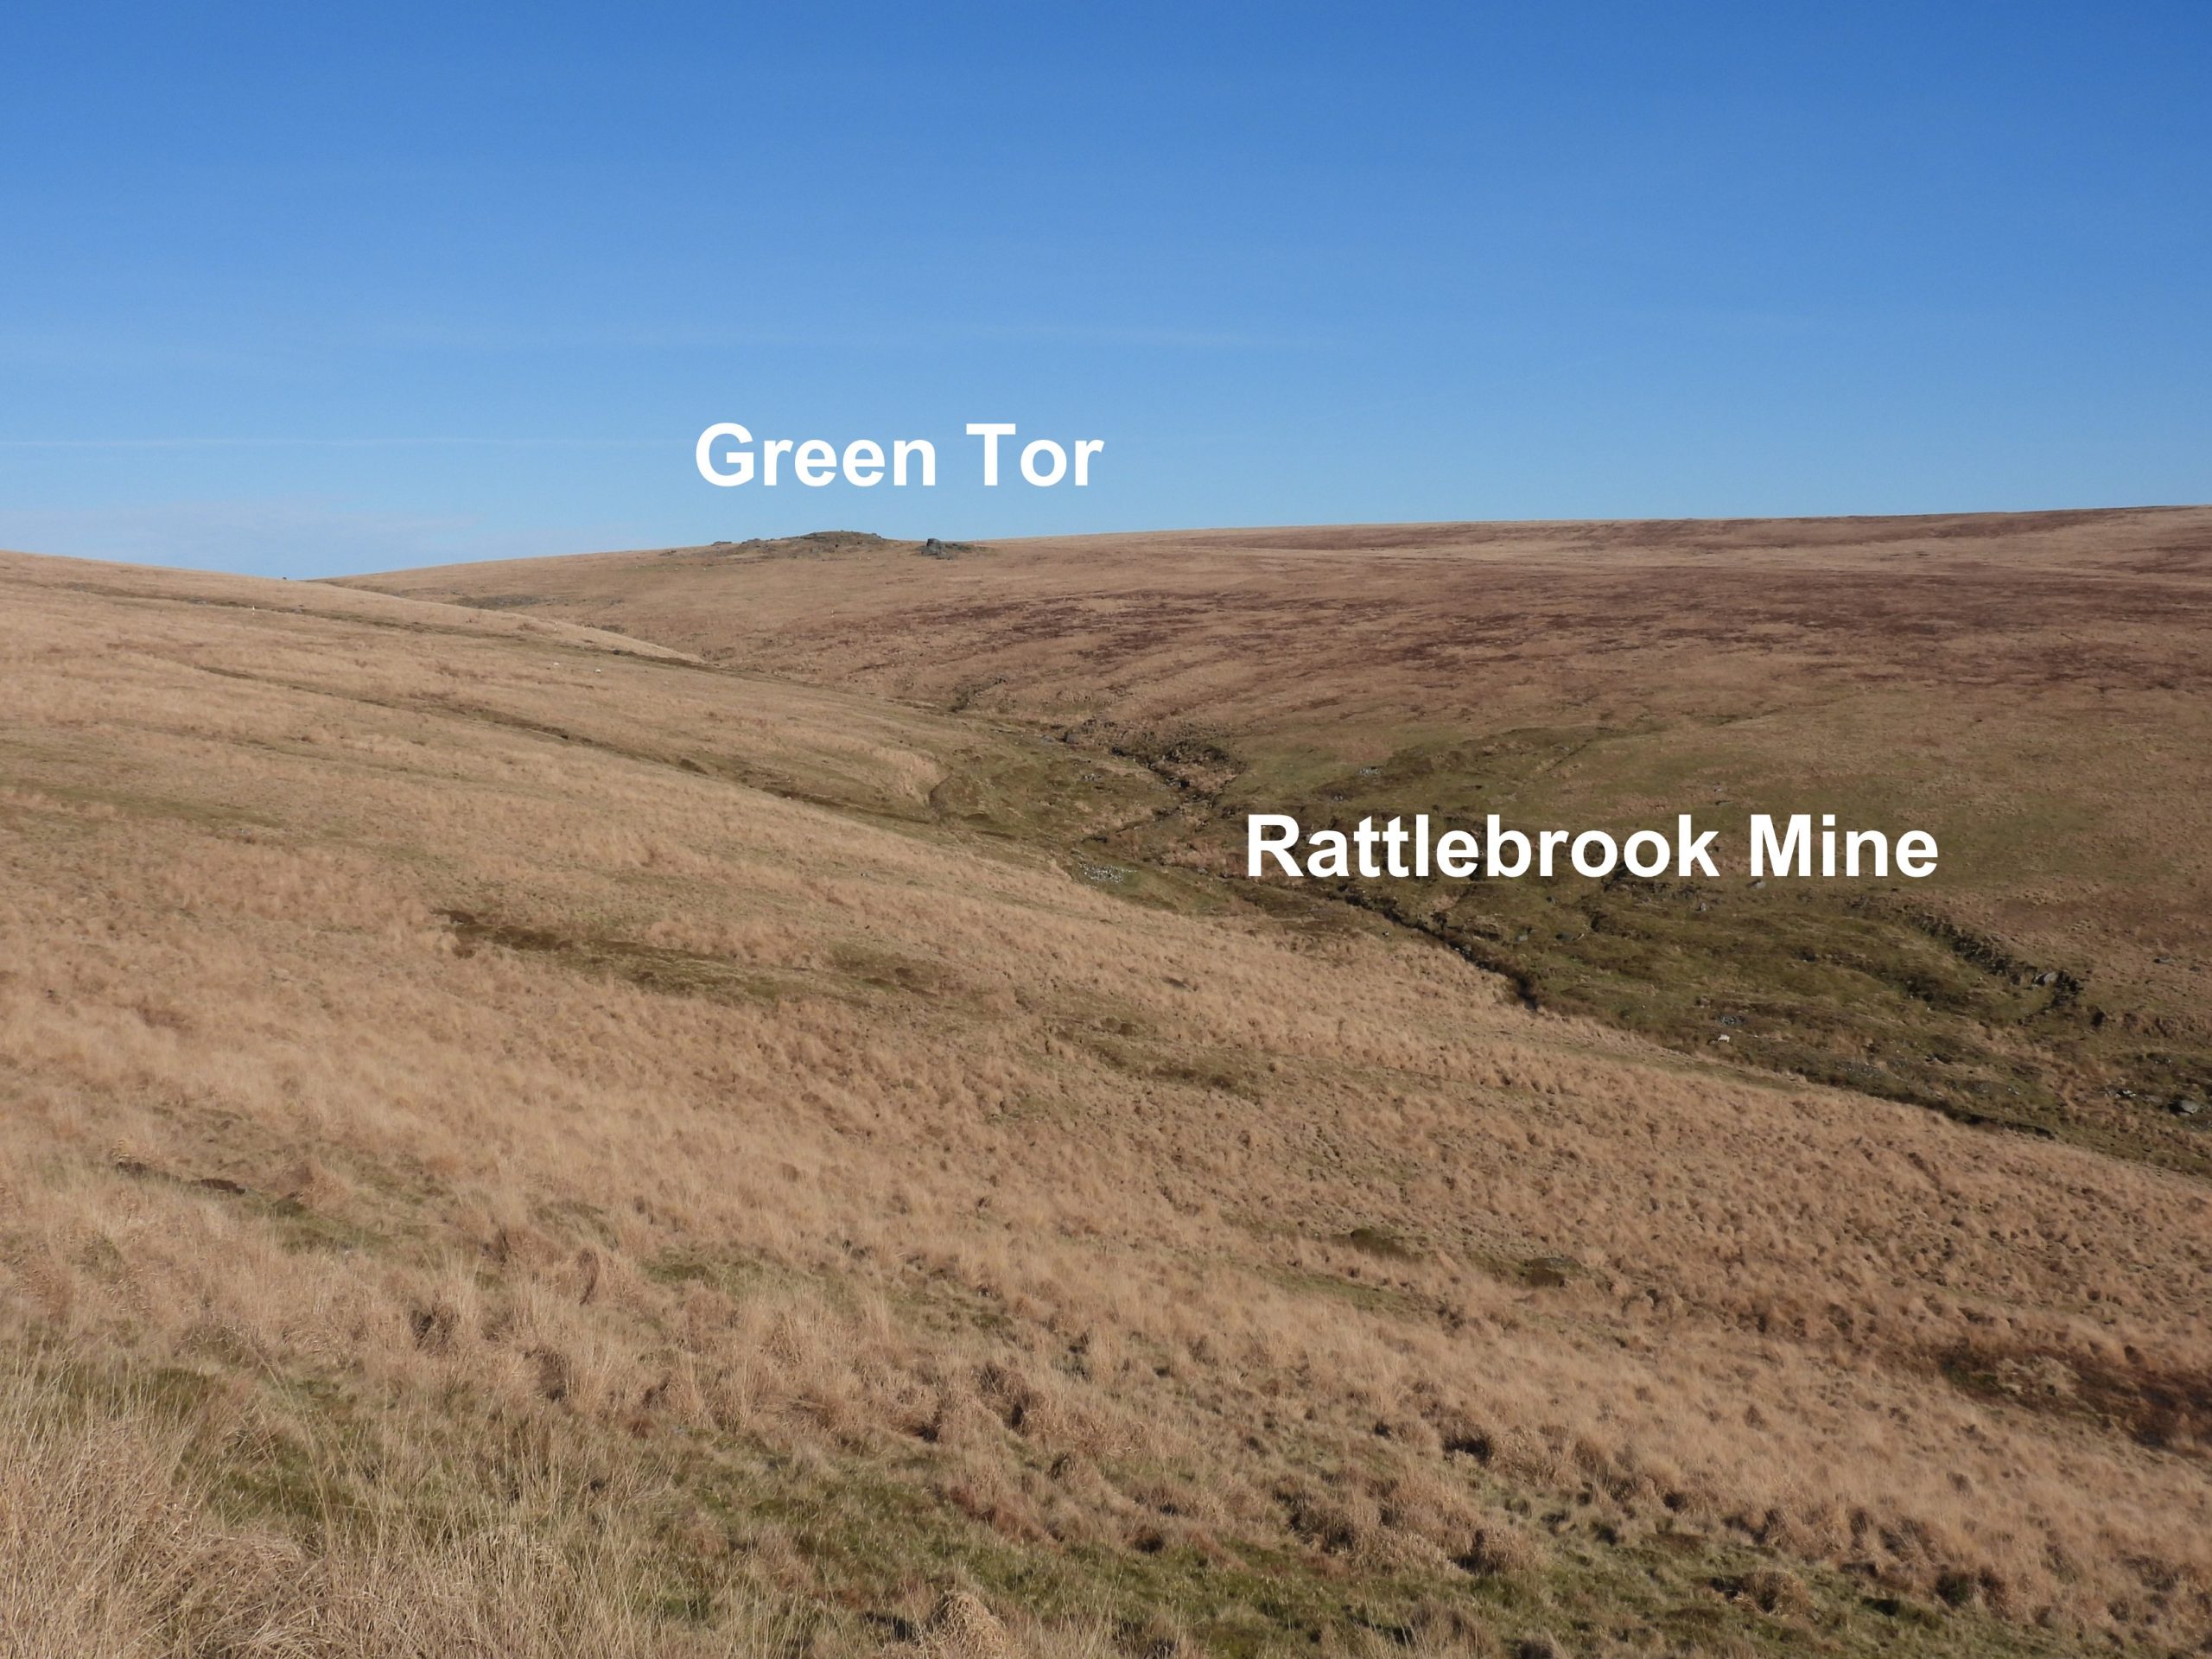 1a. Rattlebrook Mine